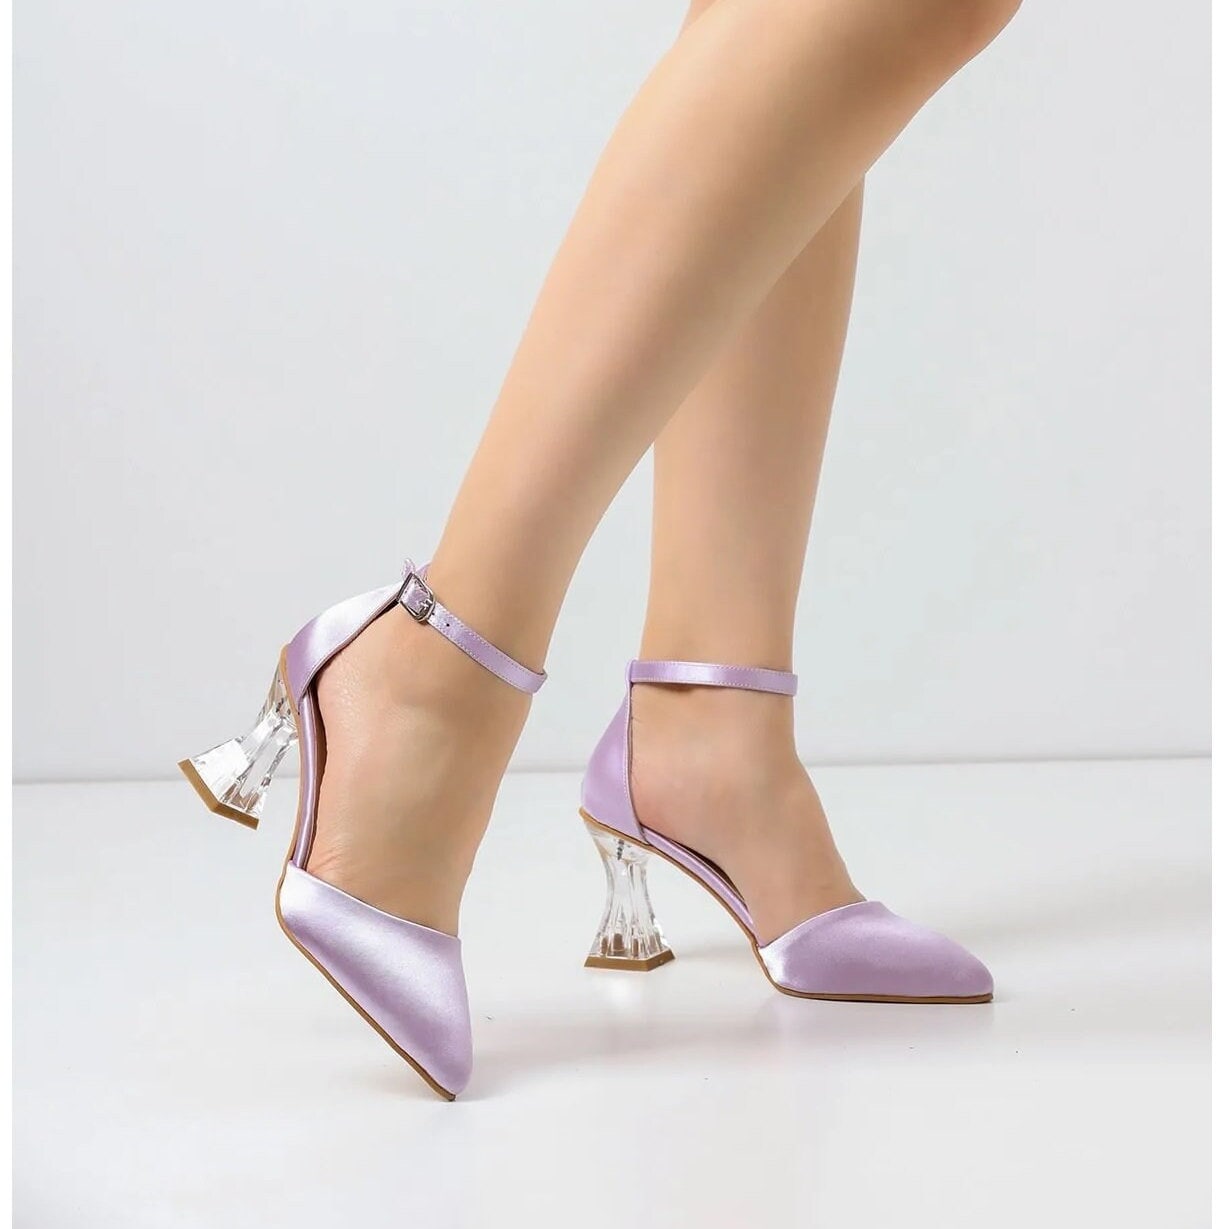 Plain Synthetic Foam Women Purple Block Heels Sandals, Size: UK-3 at Rs  260/pair in Rampur